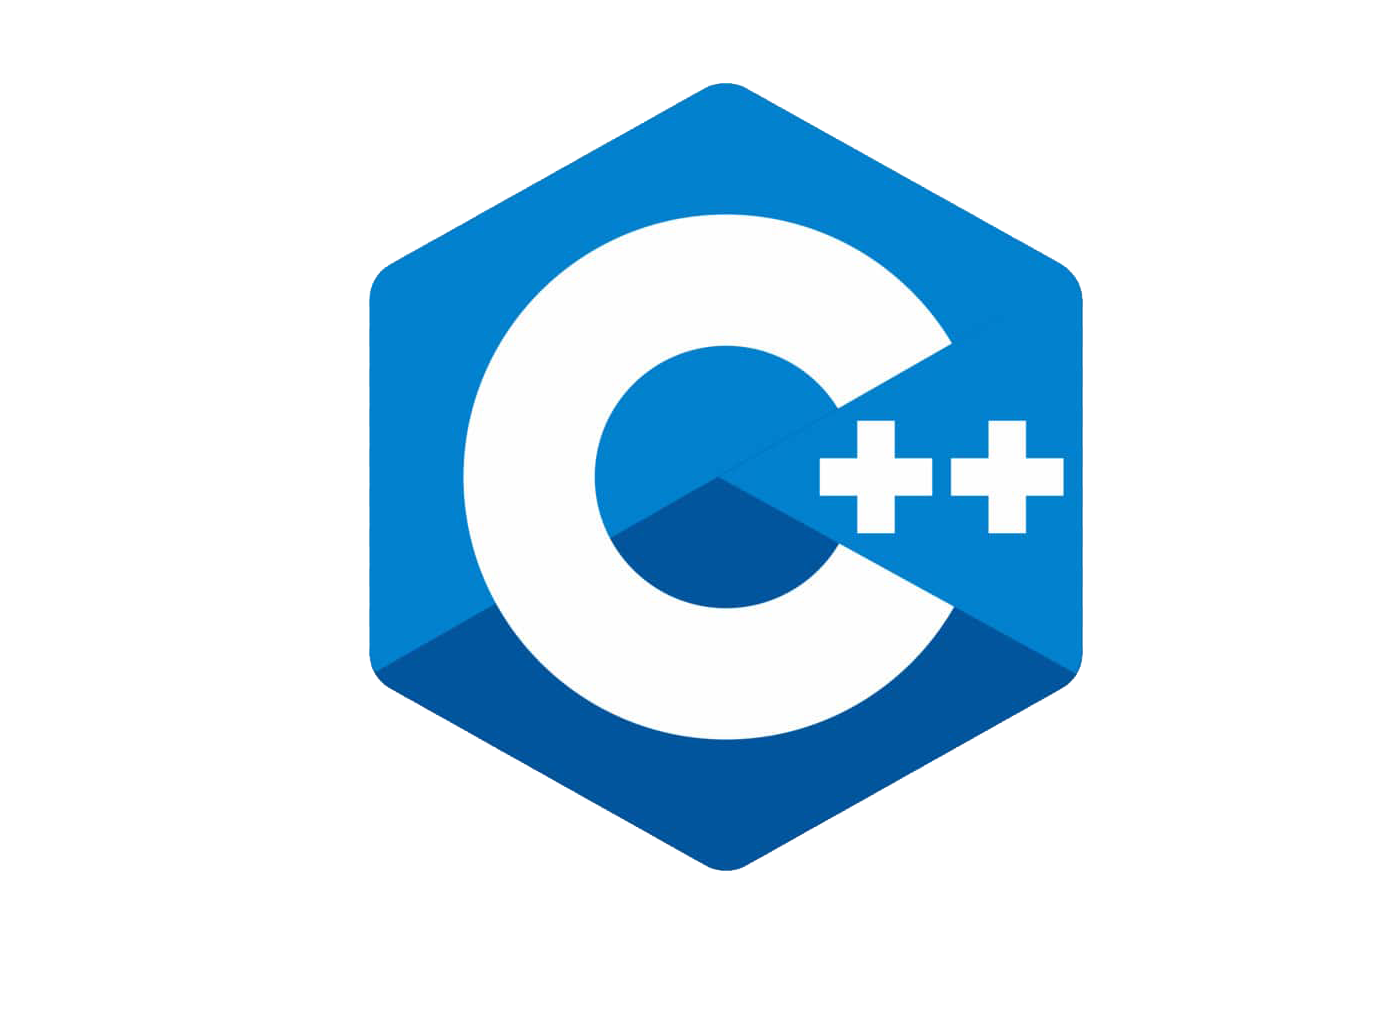 c++ programming